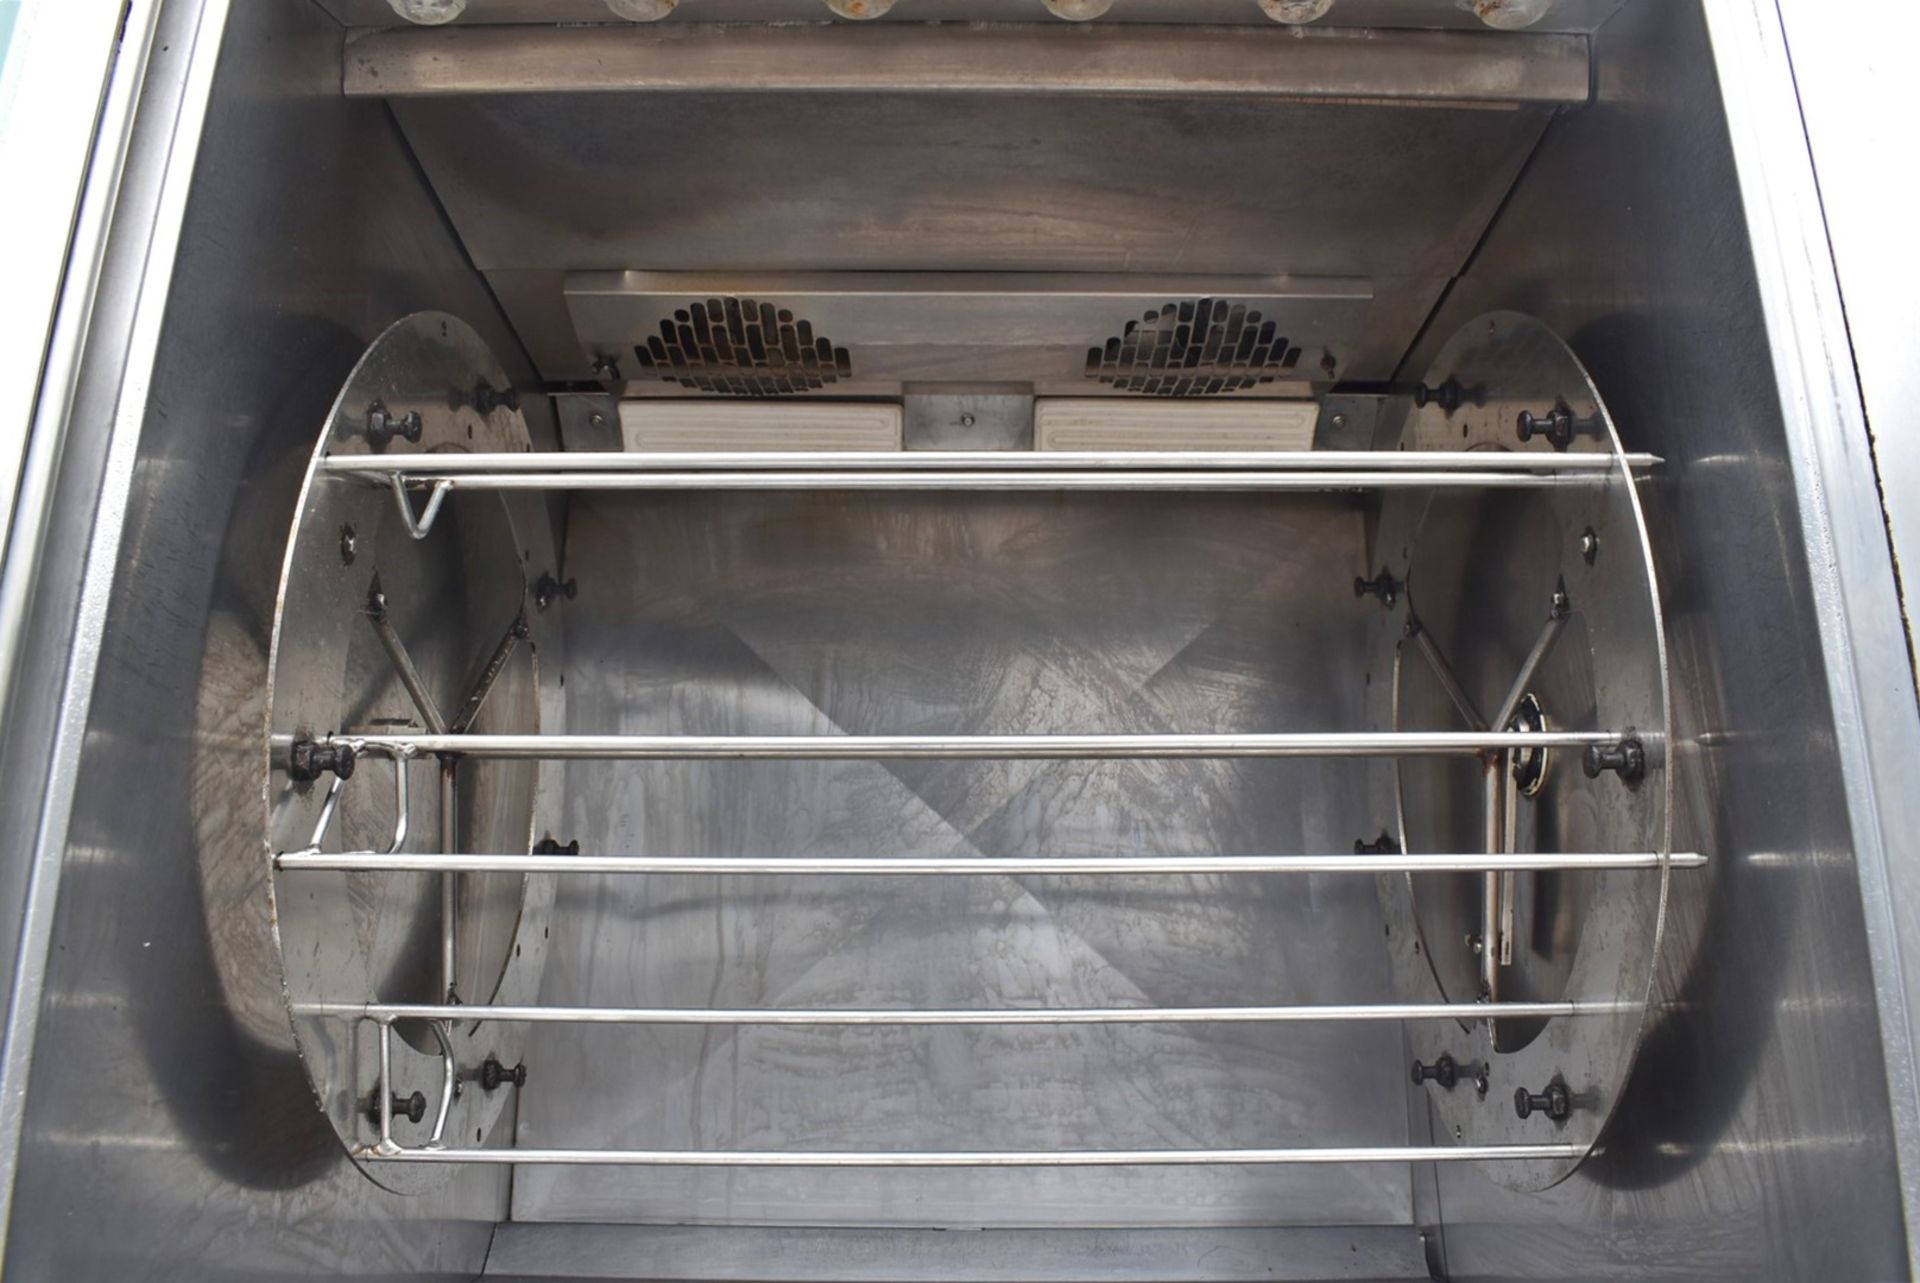 1 x Fri-Jado Rotisserie Chicken Double Oven - 3 Phase Power - Ref: JON231 - CL232 - Location: - Image 7 of 16